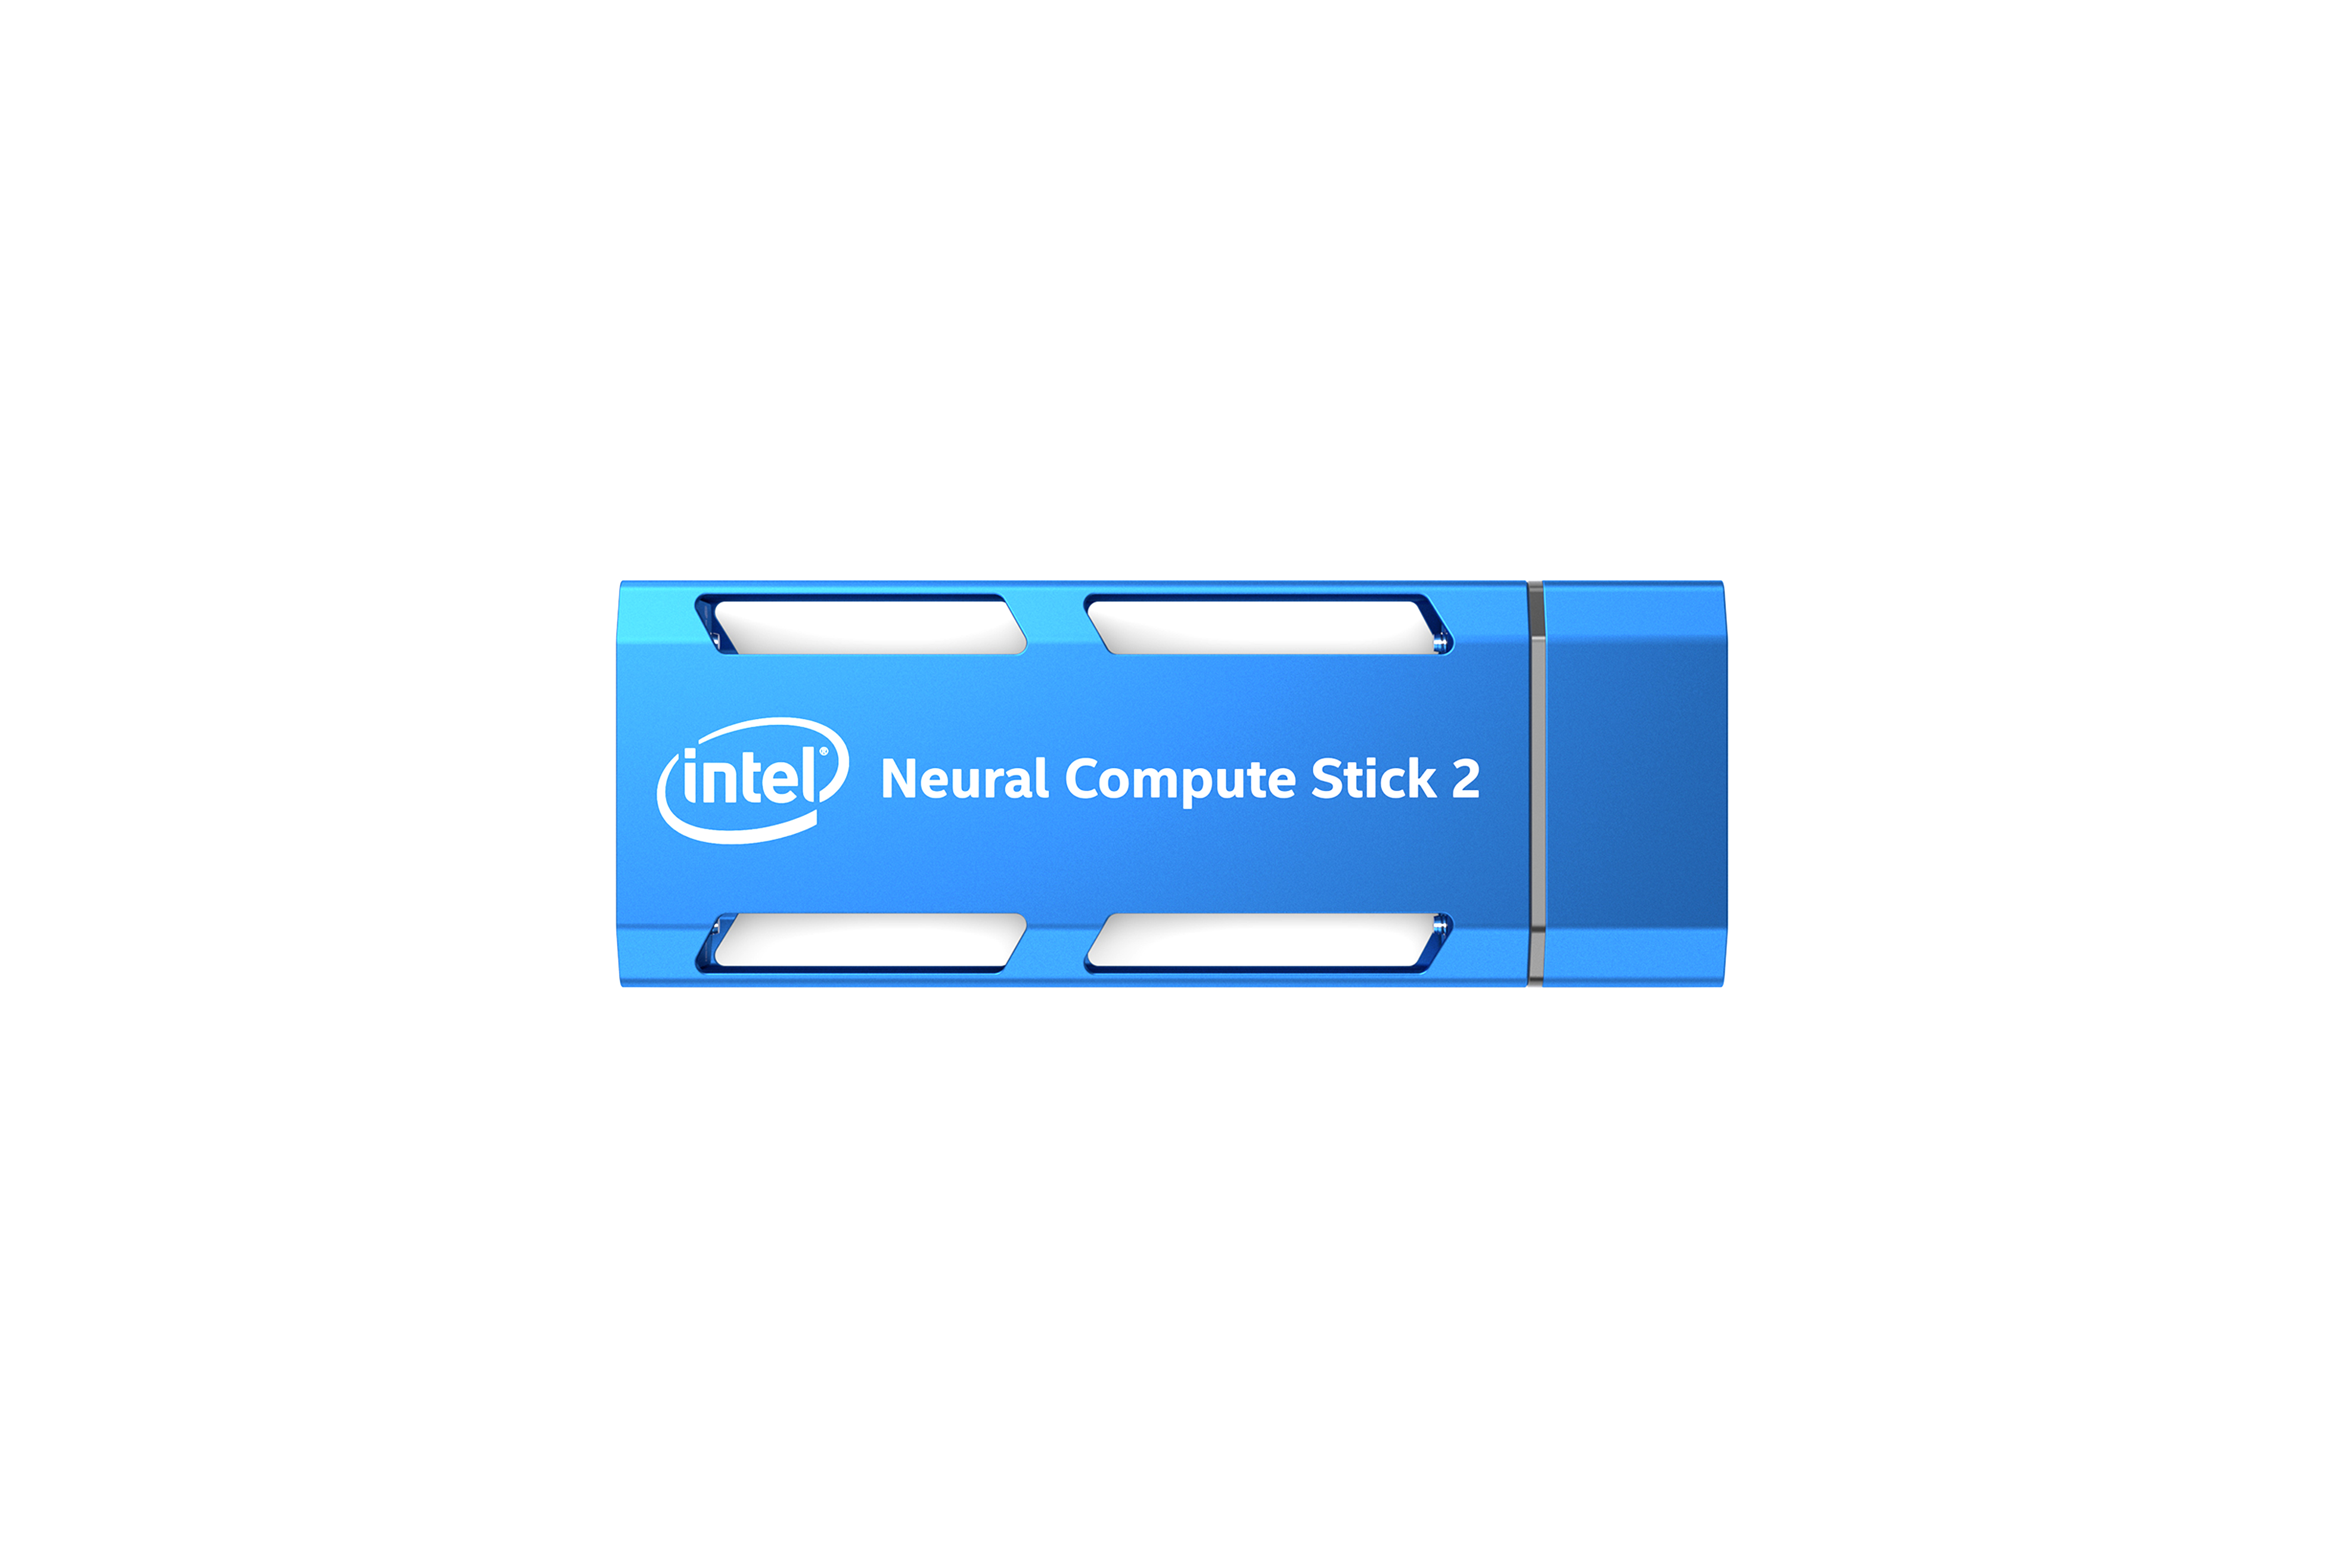 NEURAL COMPUTE STICK 2